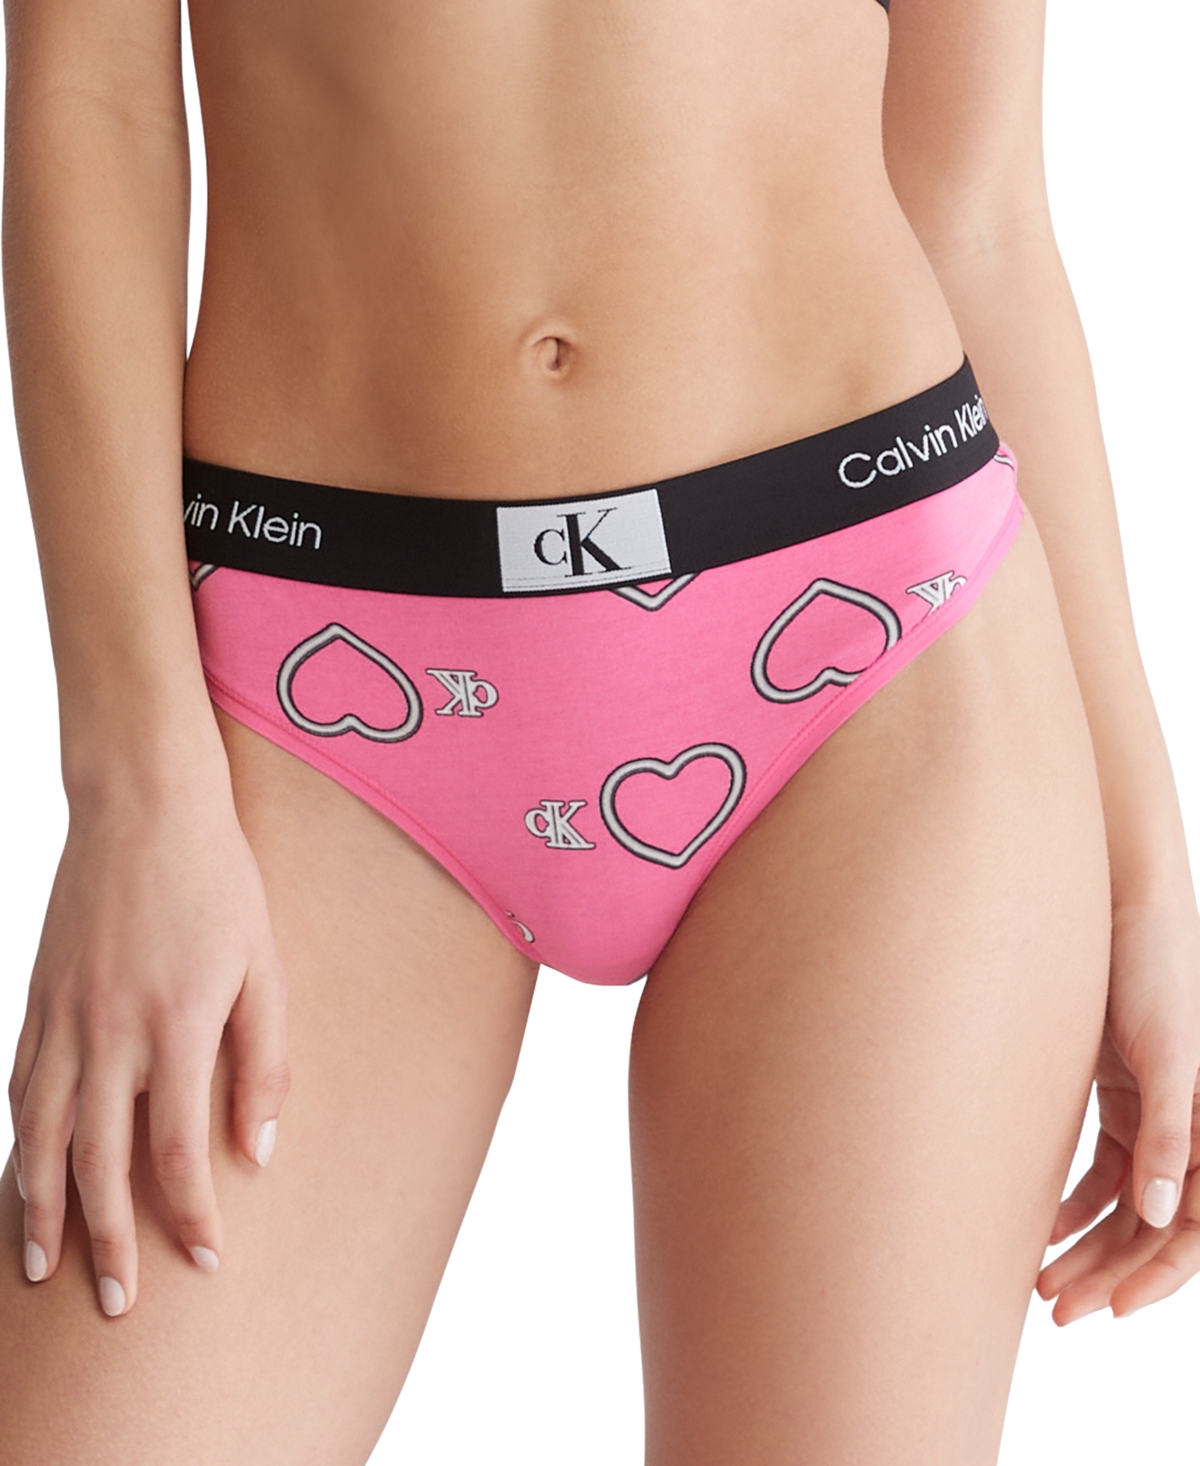 Calvin Klein CK One Logo lace sheer tanga brazilian brief in hot pink